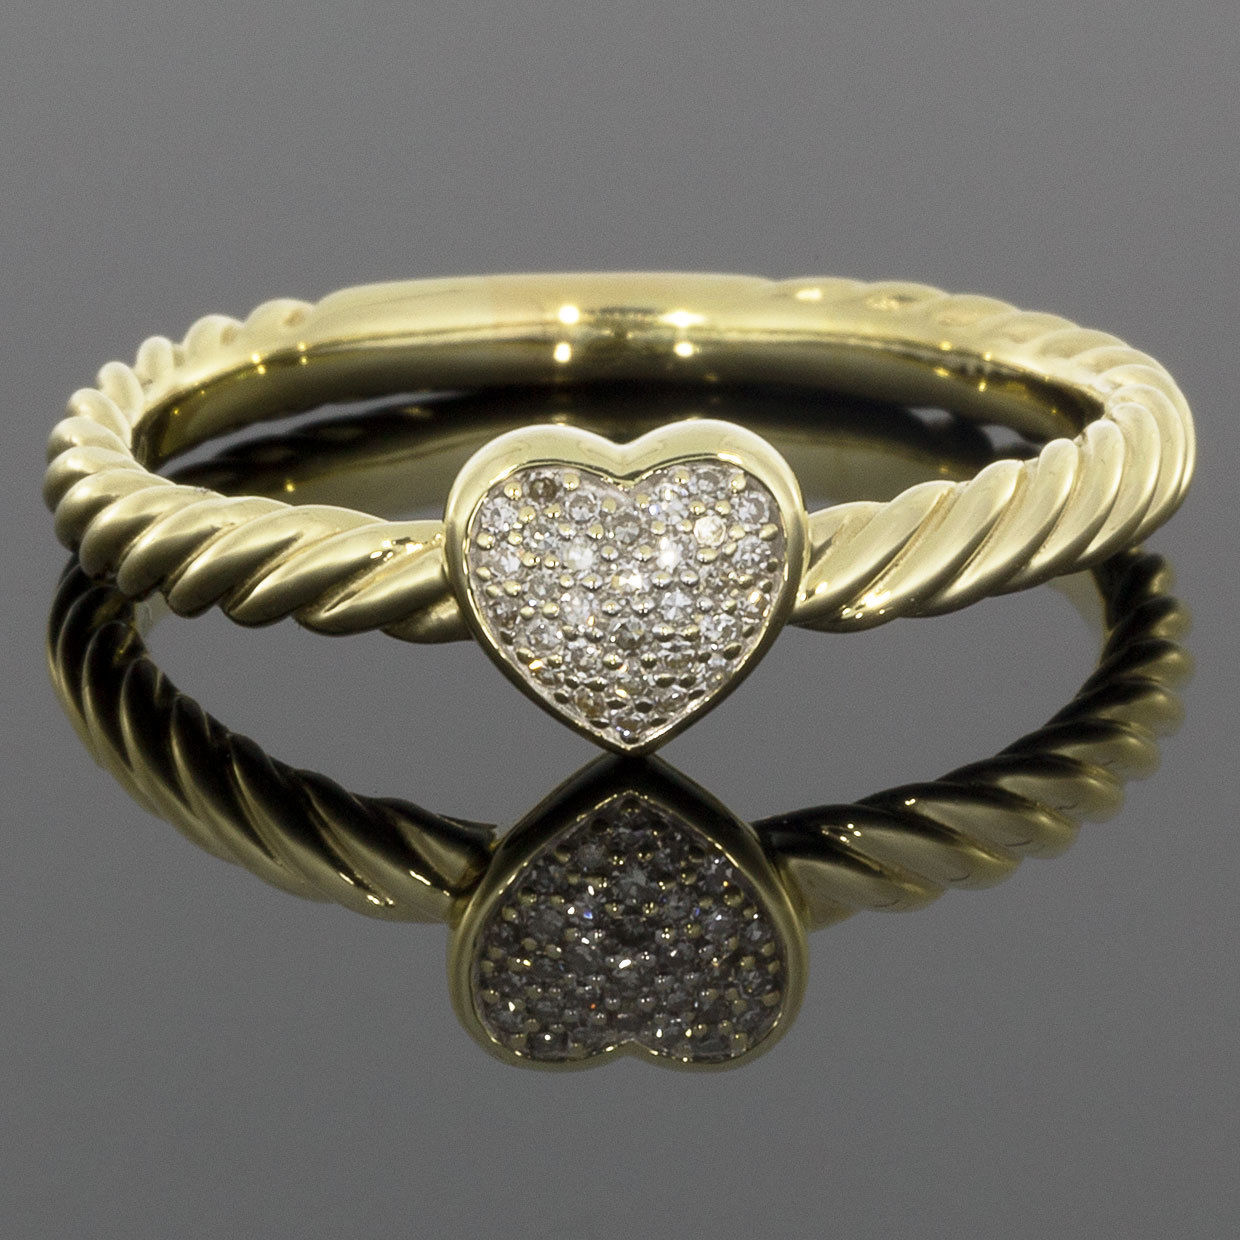 Buy or Sell David Yurman Stackable Rings Diamond Banc